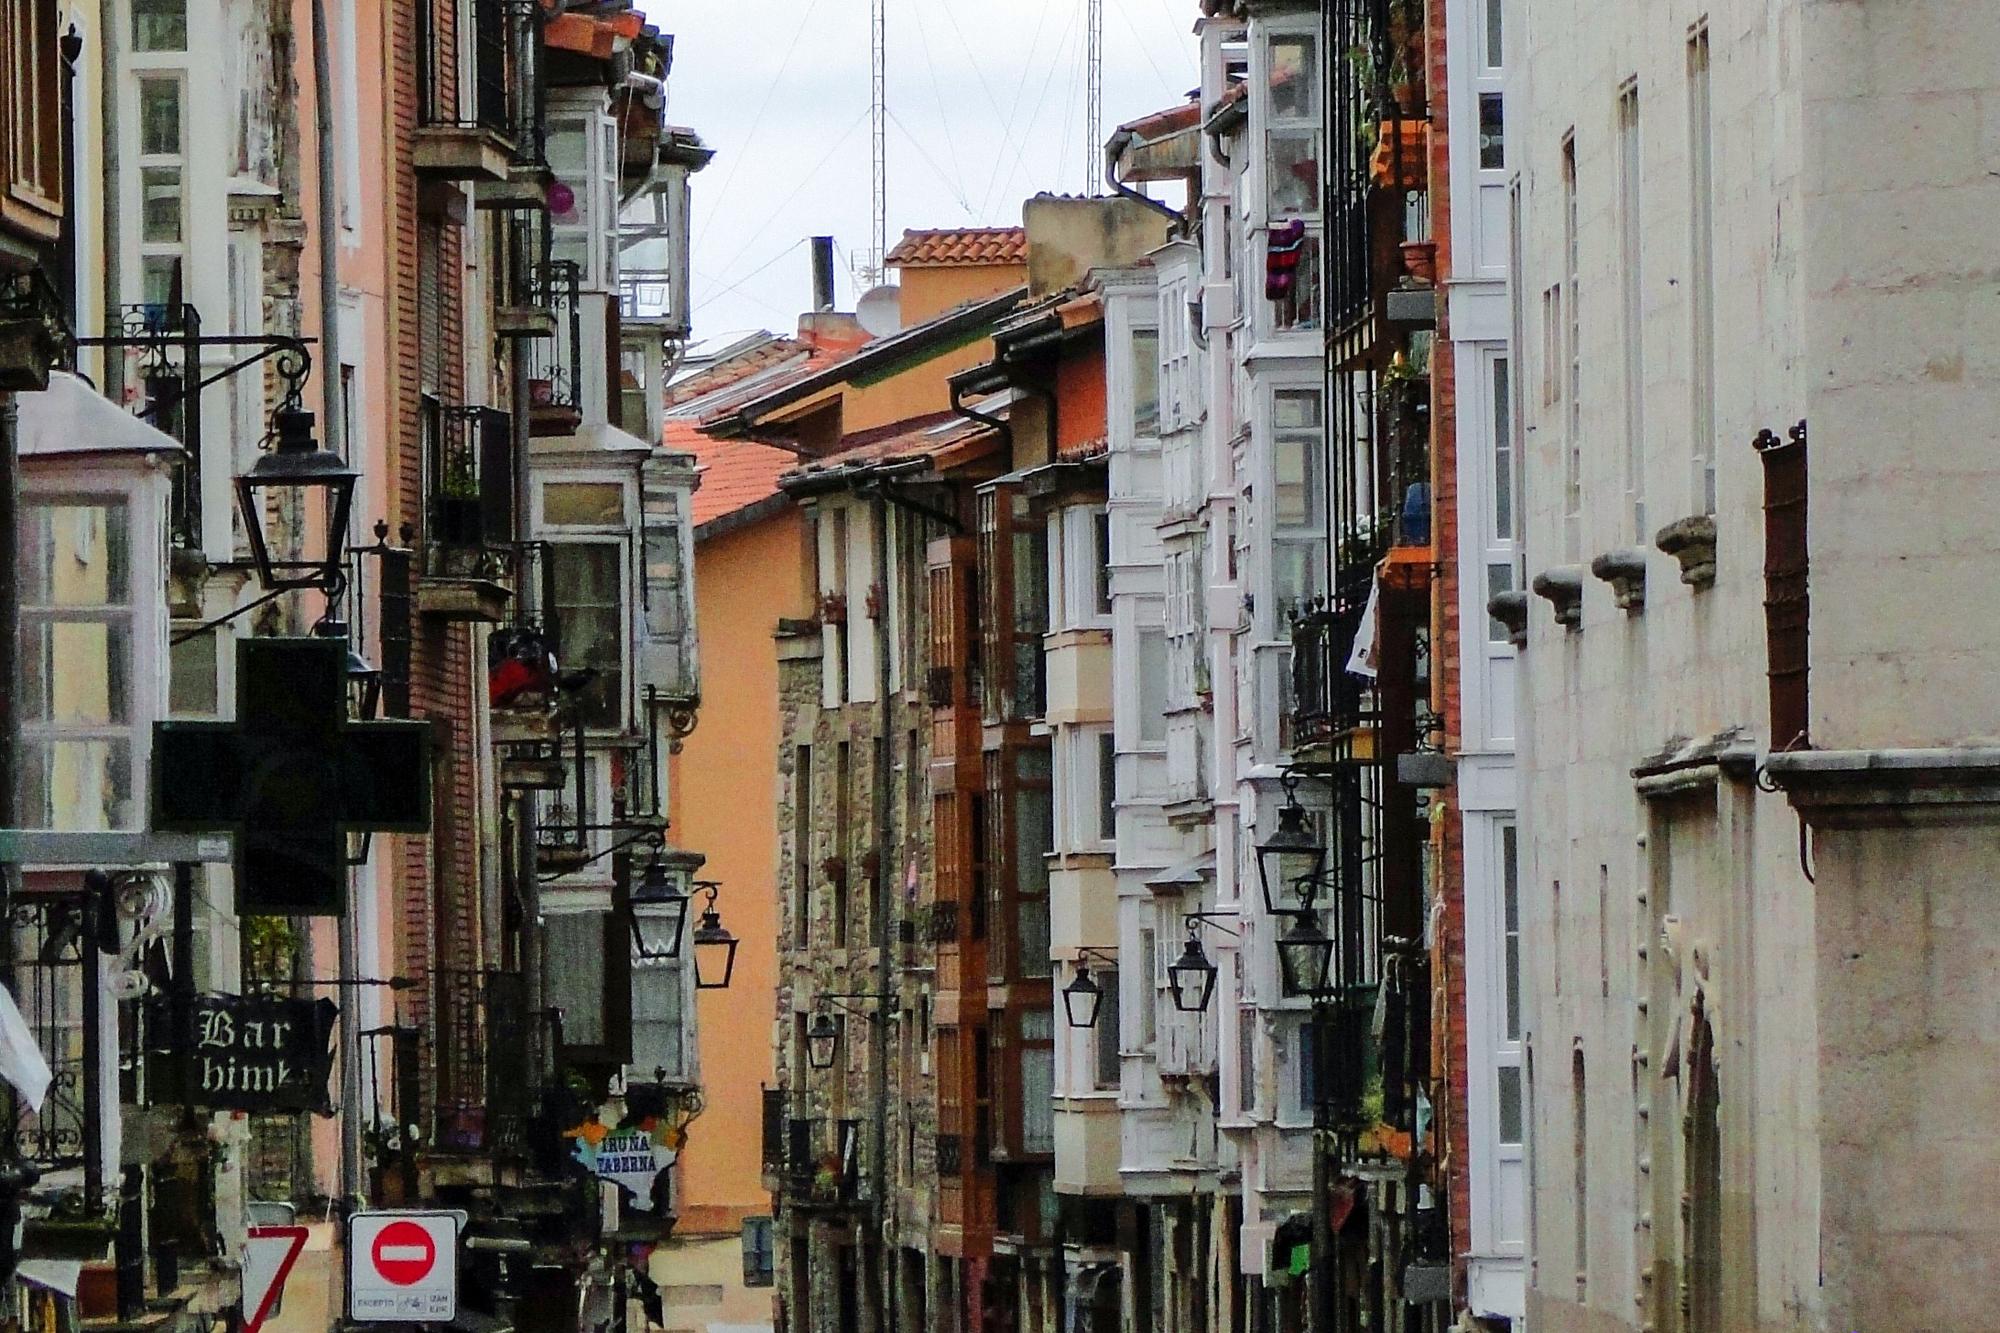 Calle Cuchillería Gasteiz